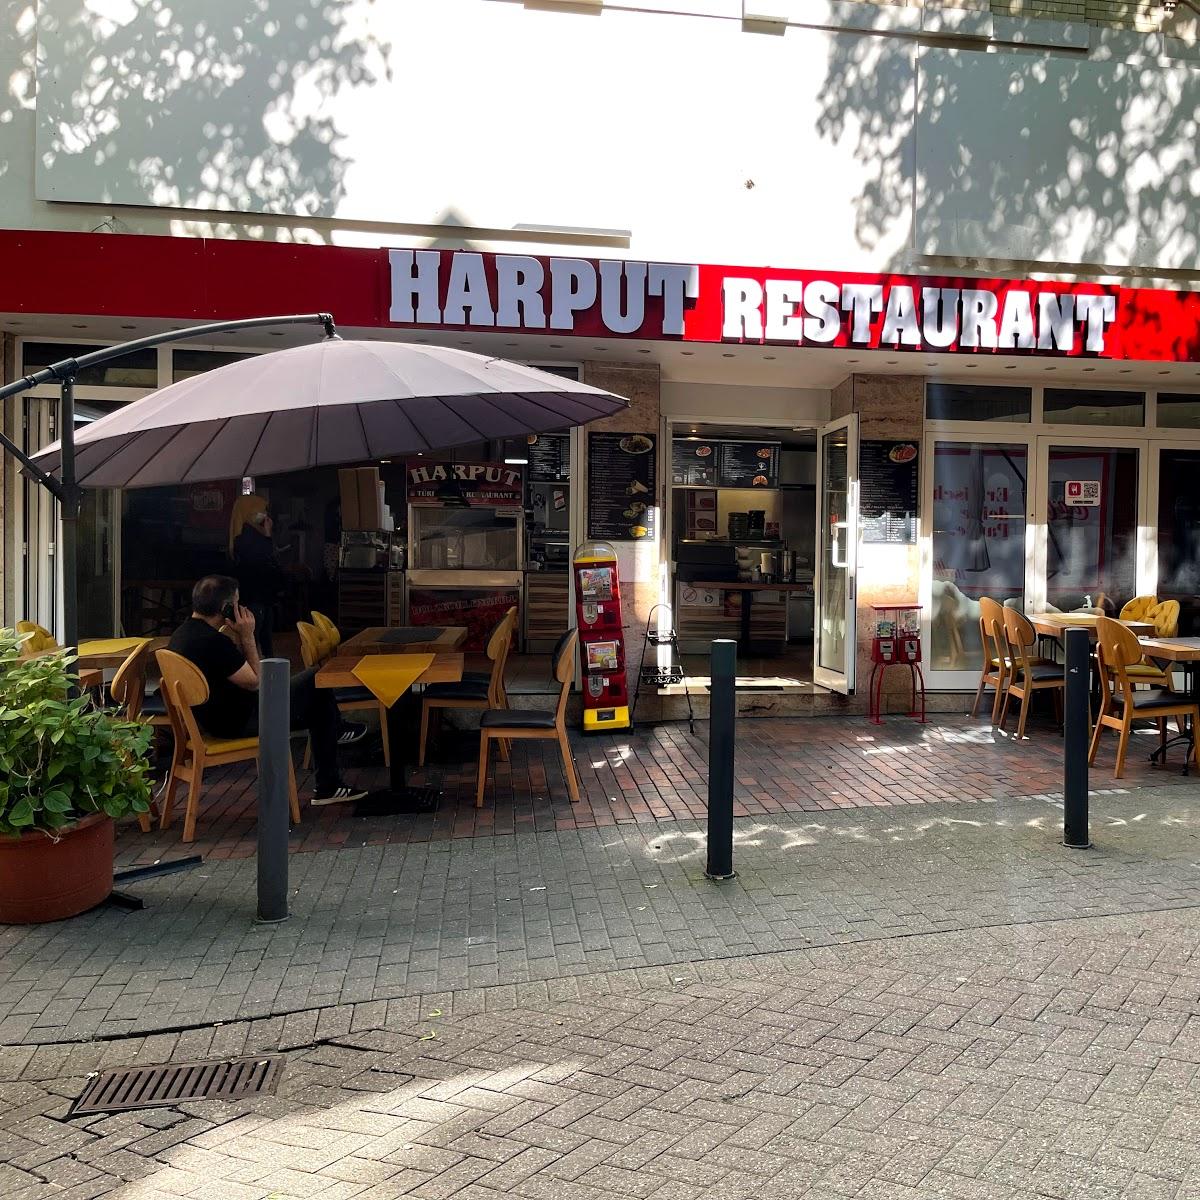 Restaurant "Harput Restaurant" in Dortmund